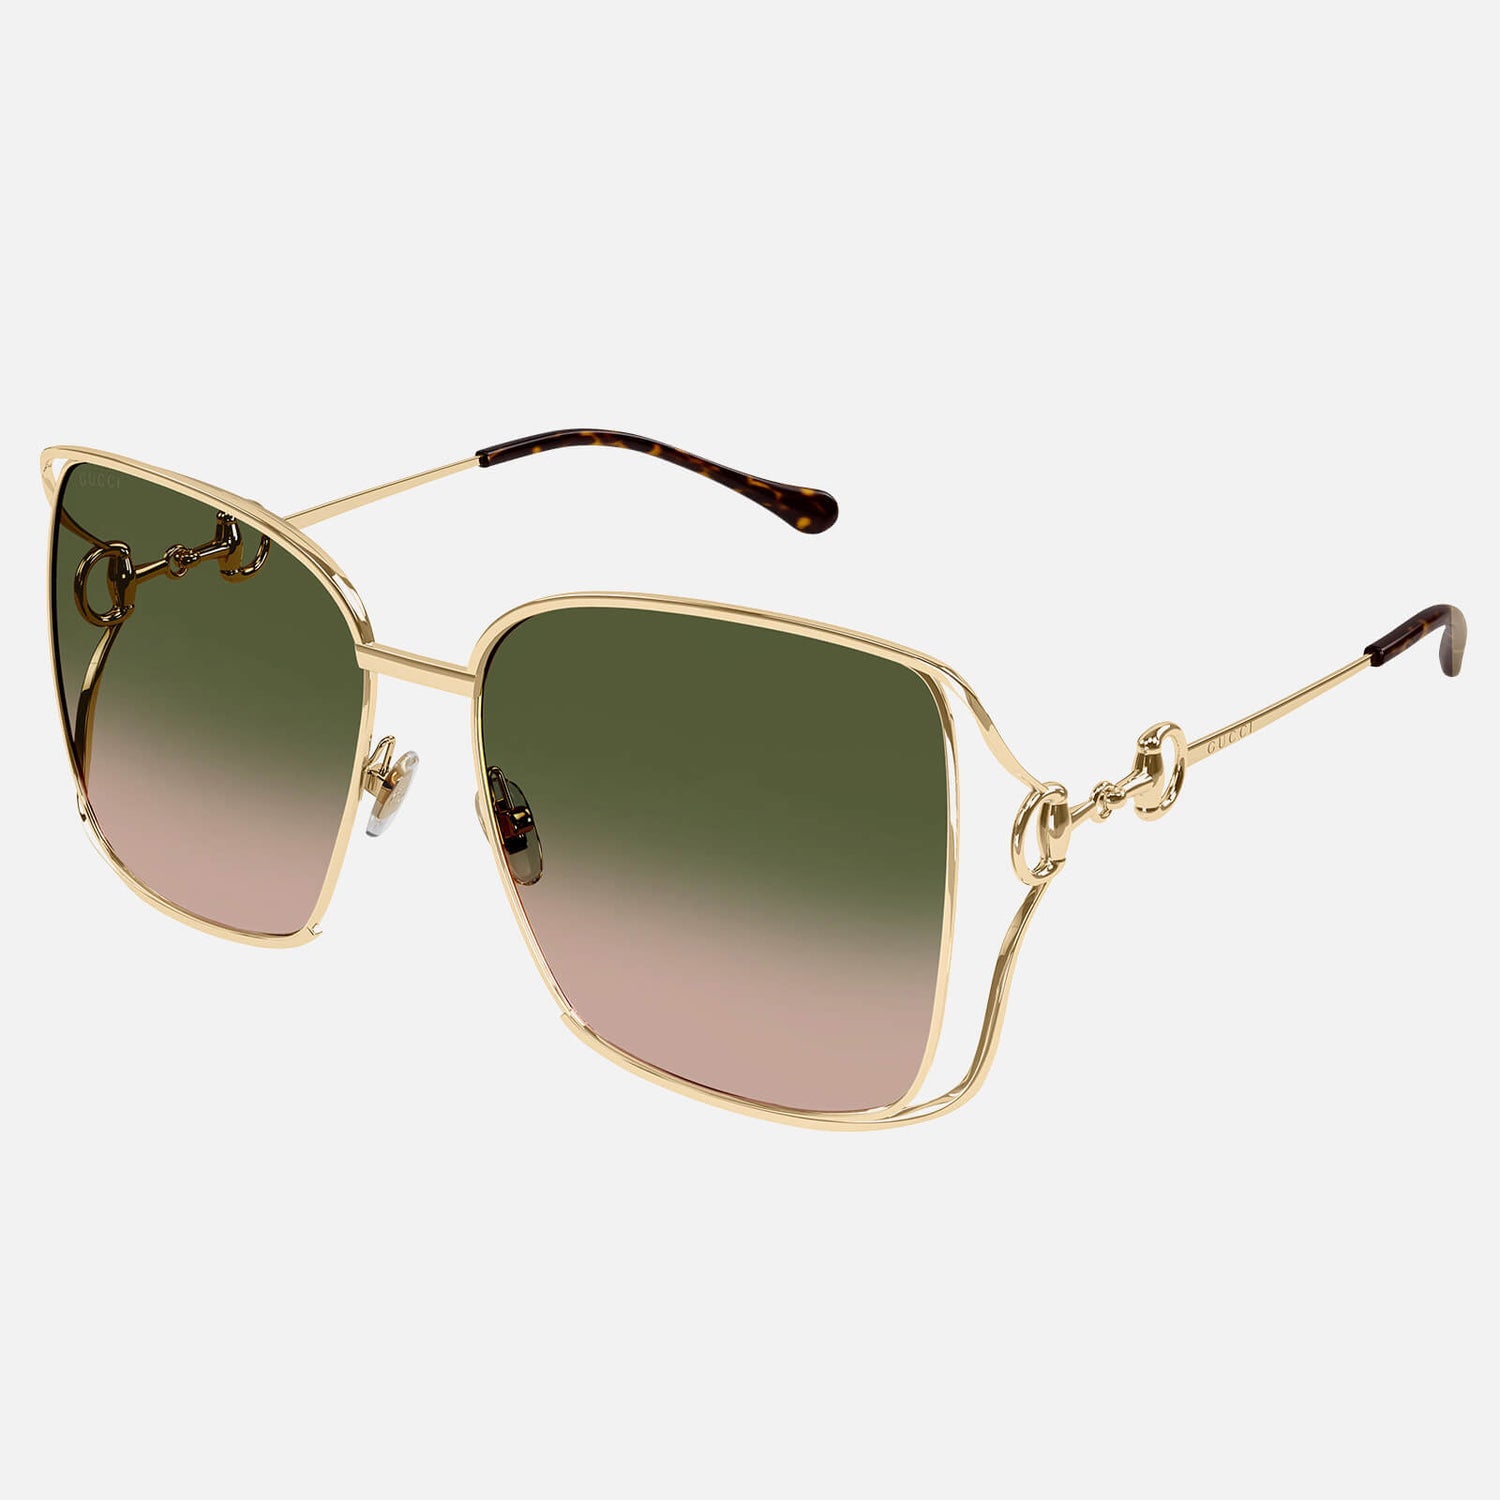 Gucci Women's Square Horsebit Detail Sunglasses - Gold/Green